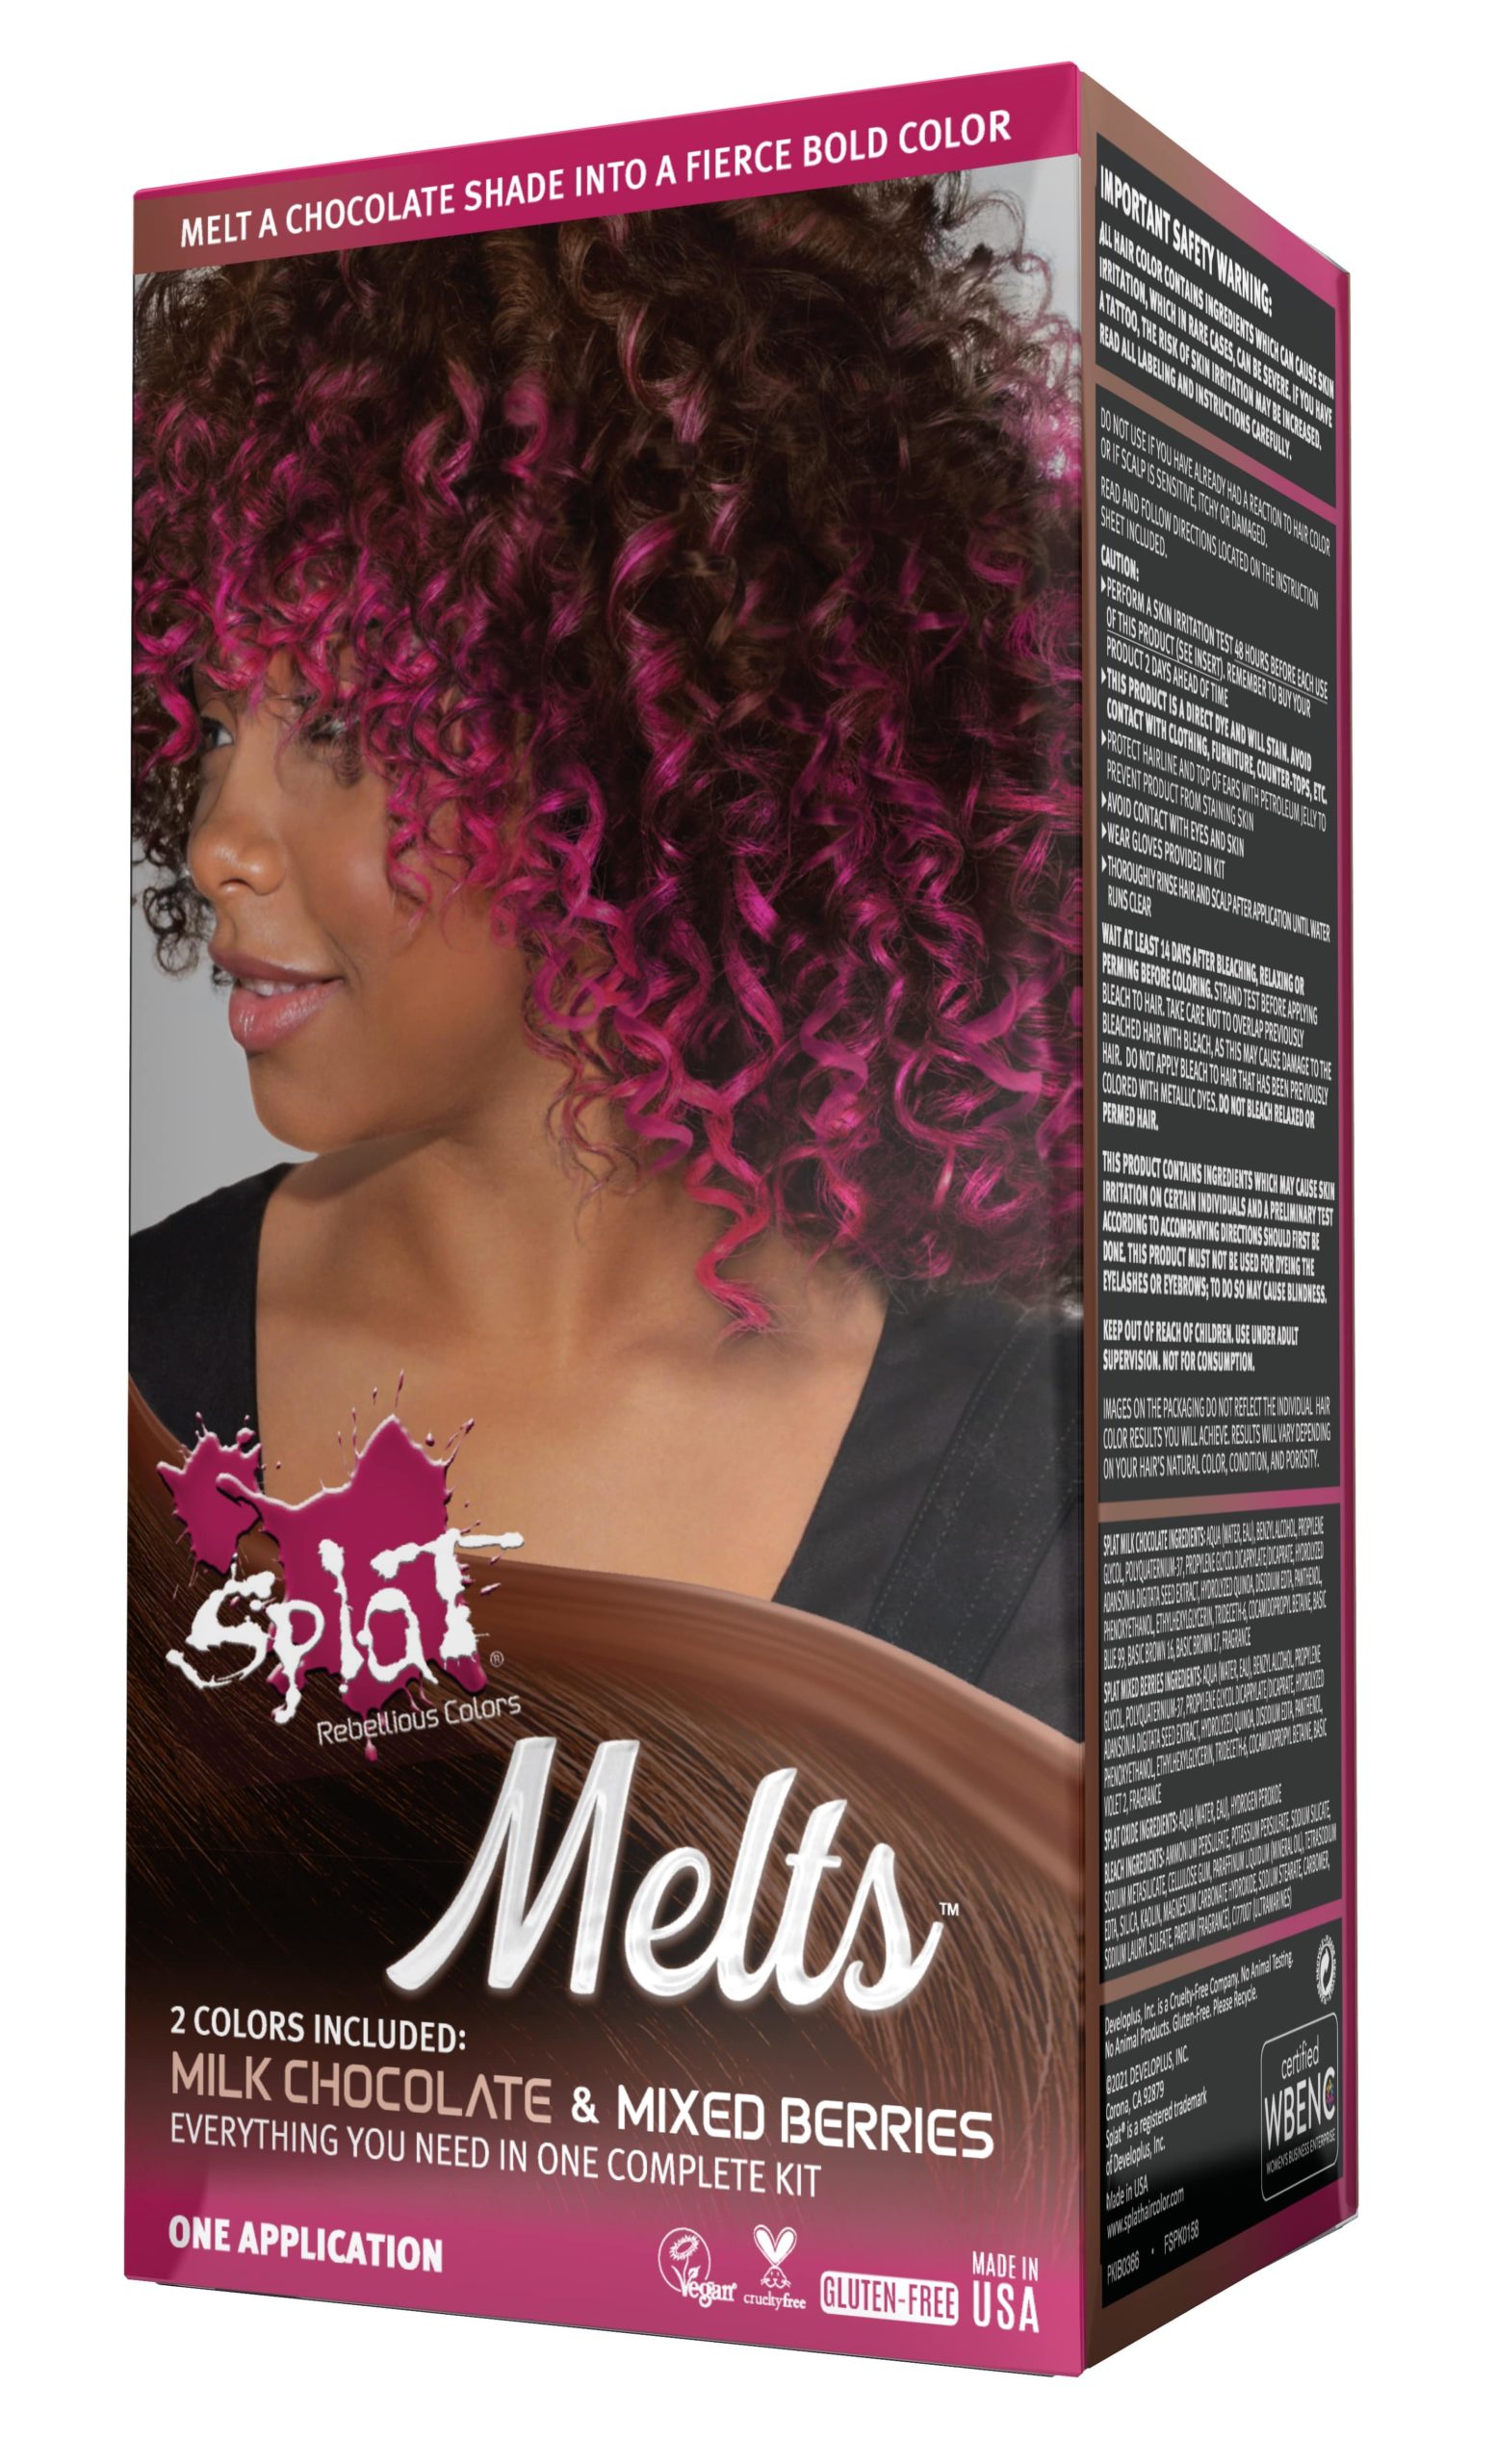 Level Up Your Hair With New Splat Melts - V Magazine